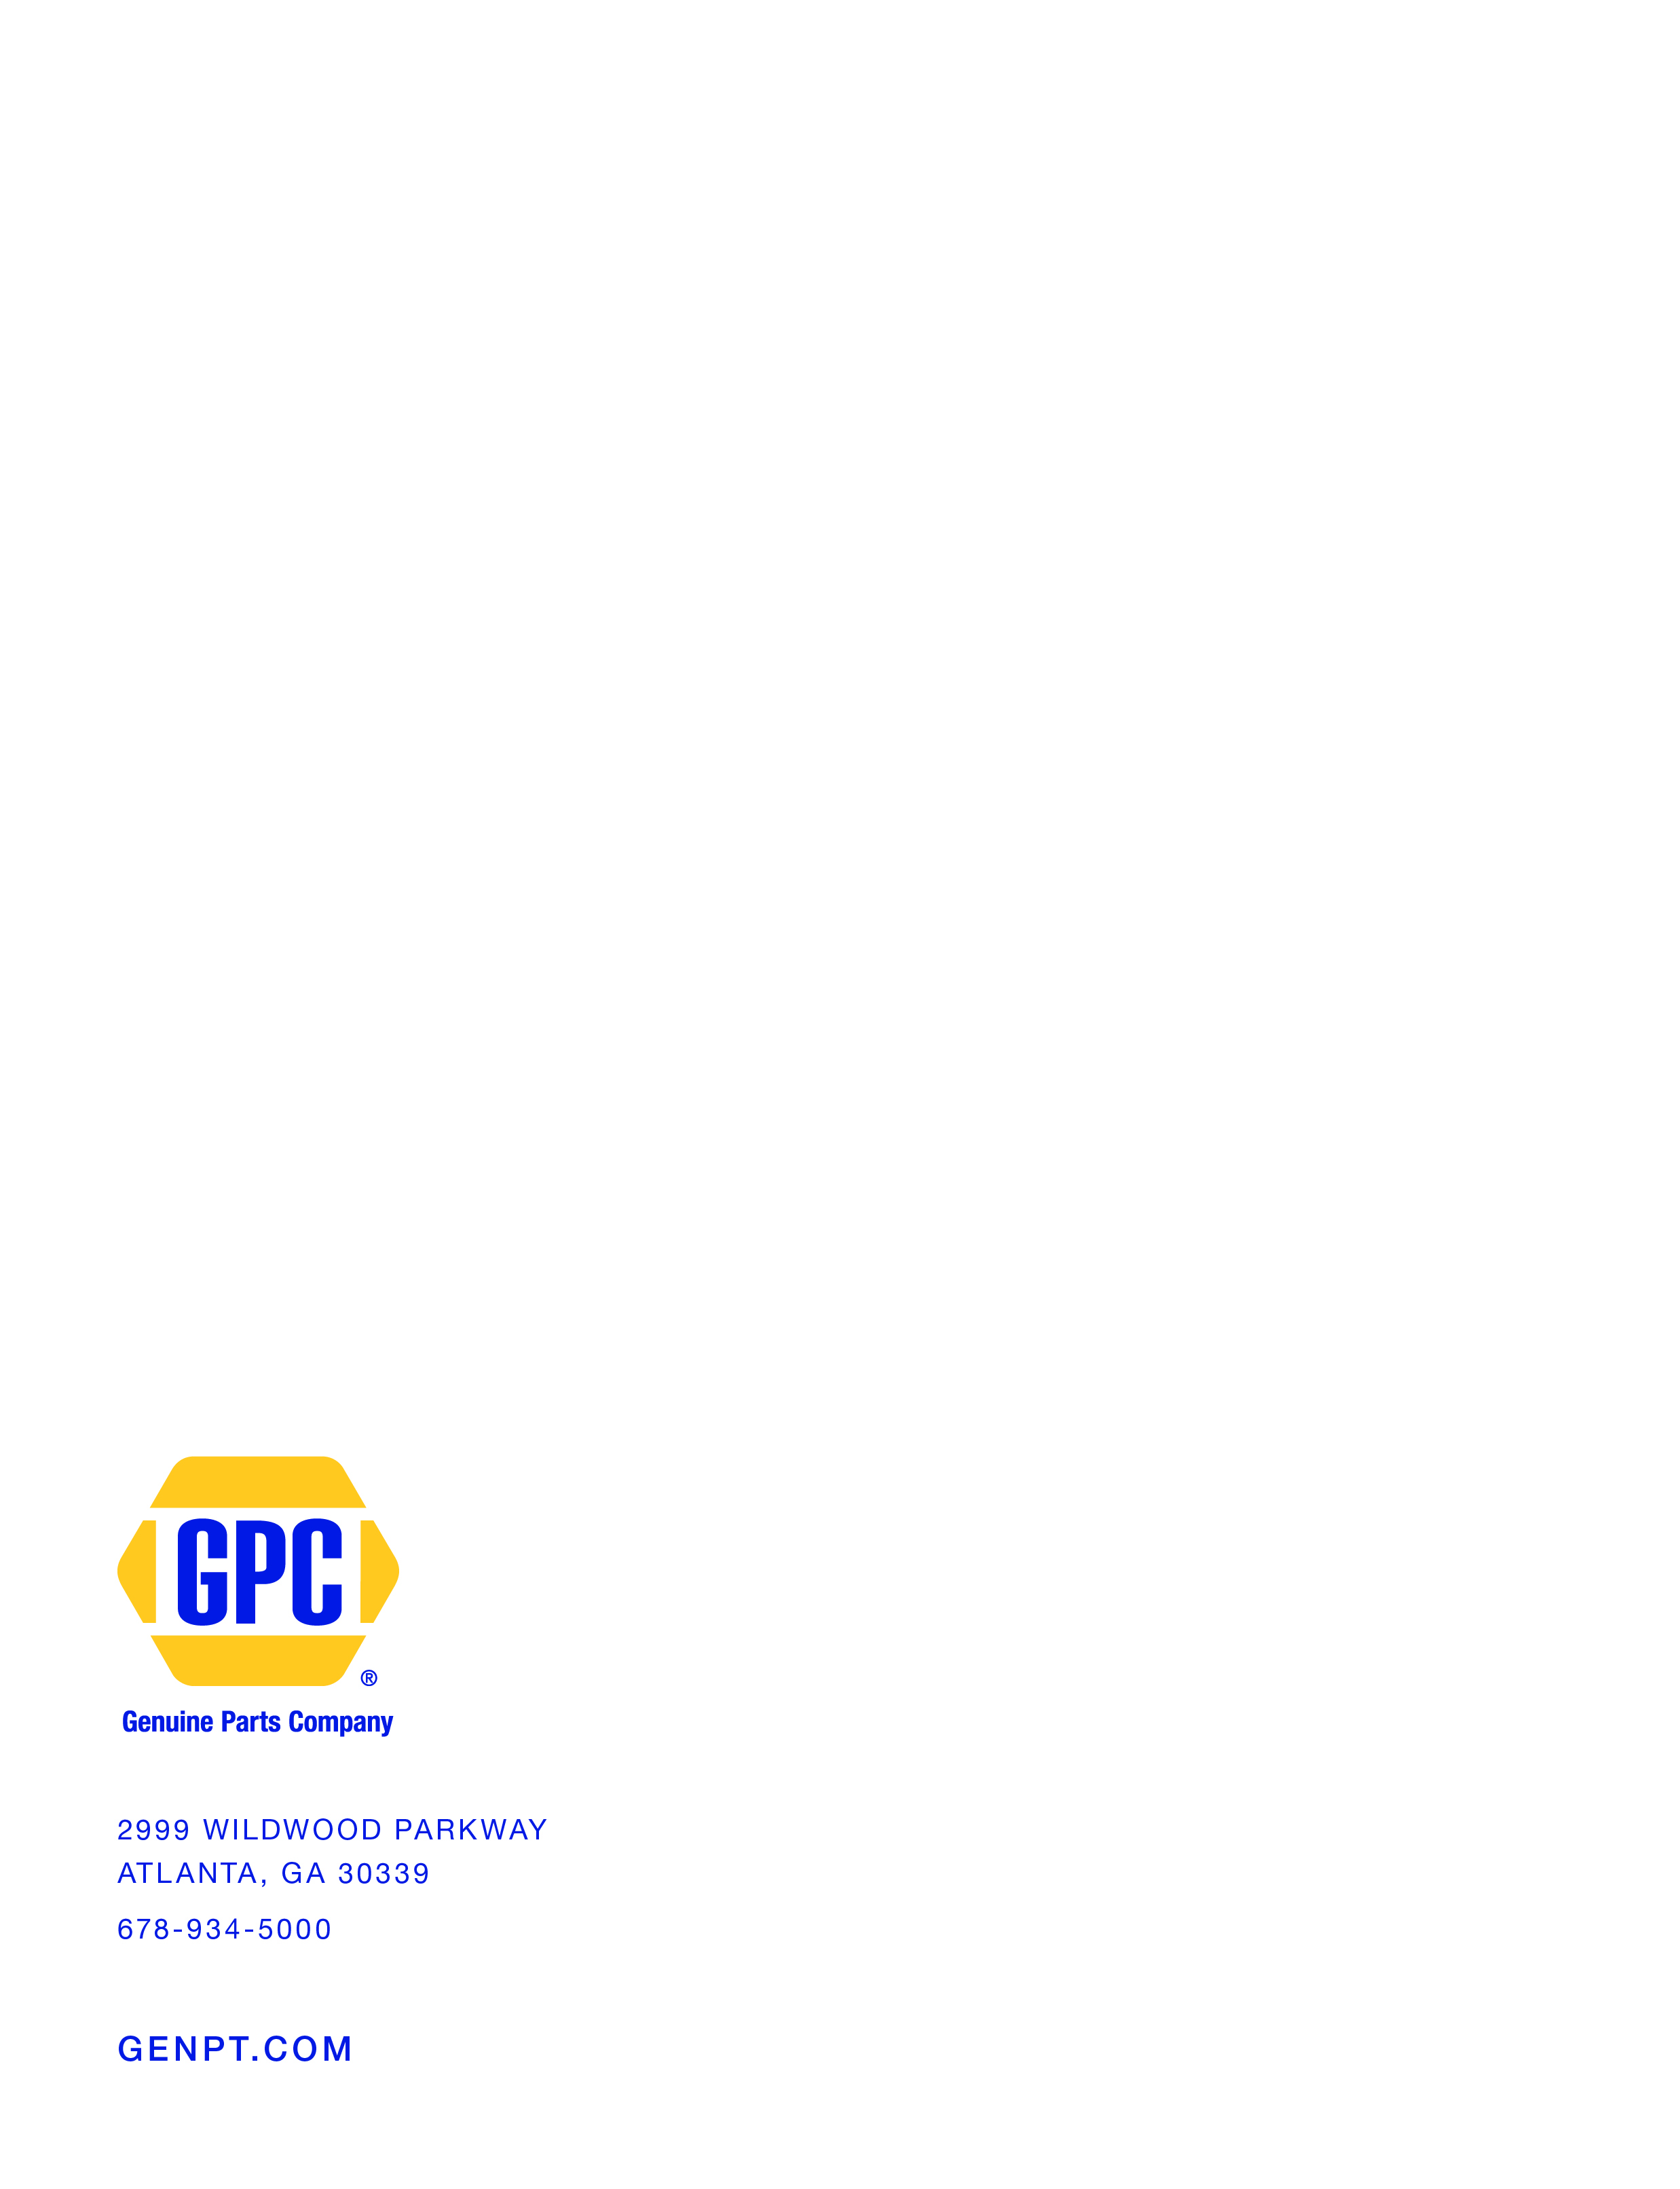 23_GPC_012917_2023_Proxy_Cover_R9_BC.jpg